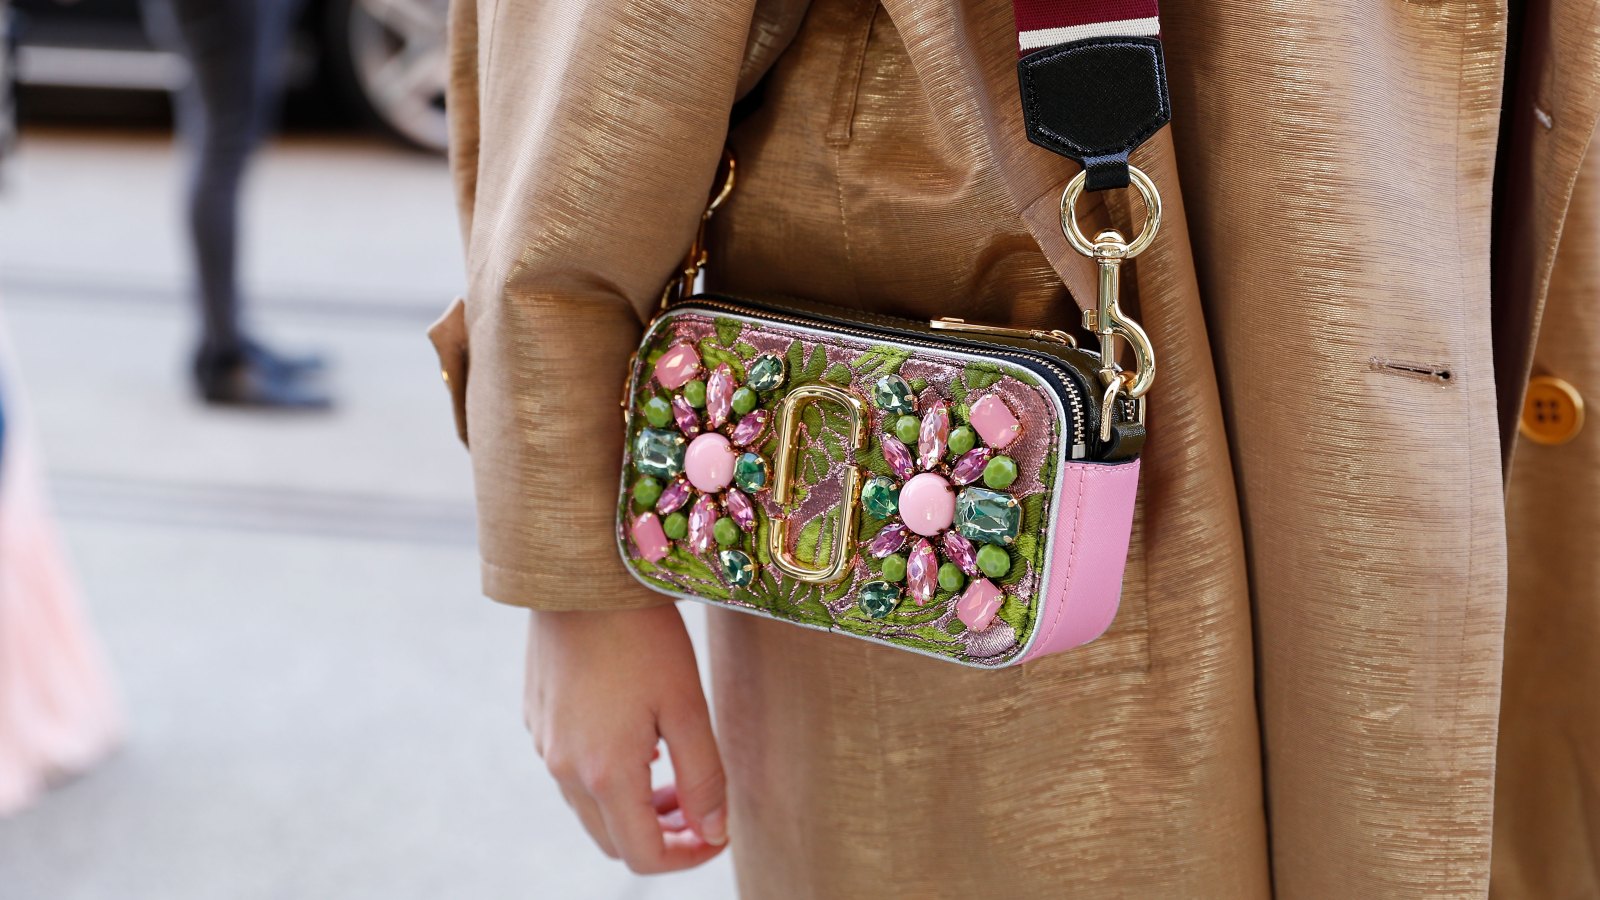 Marc Jacobs Woman's Mini Bag